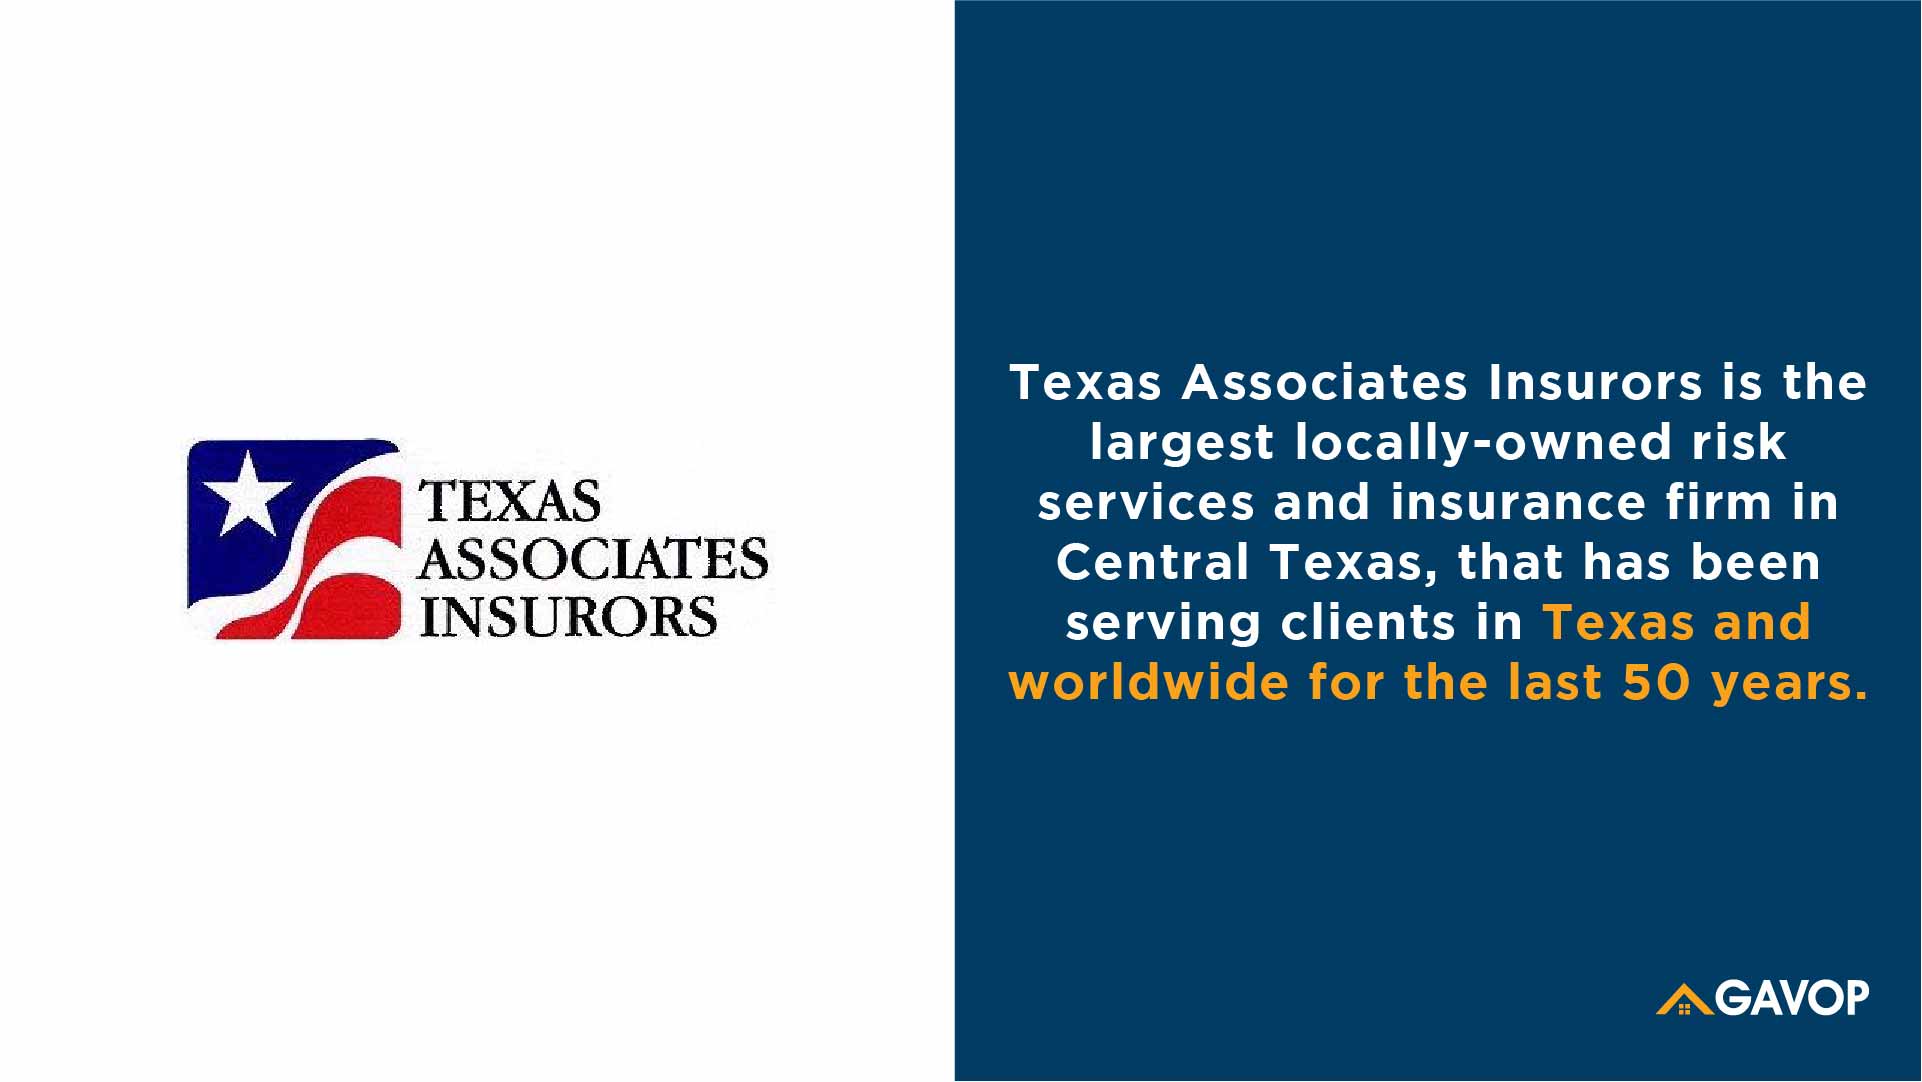 Texas Associates Insurors